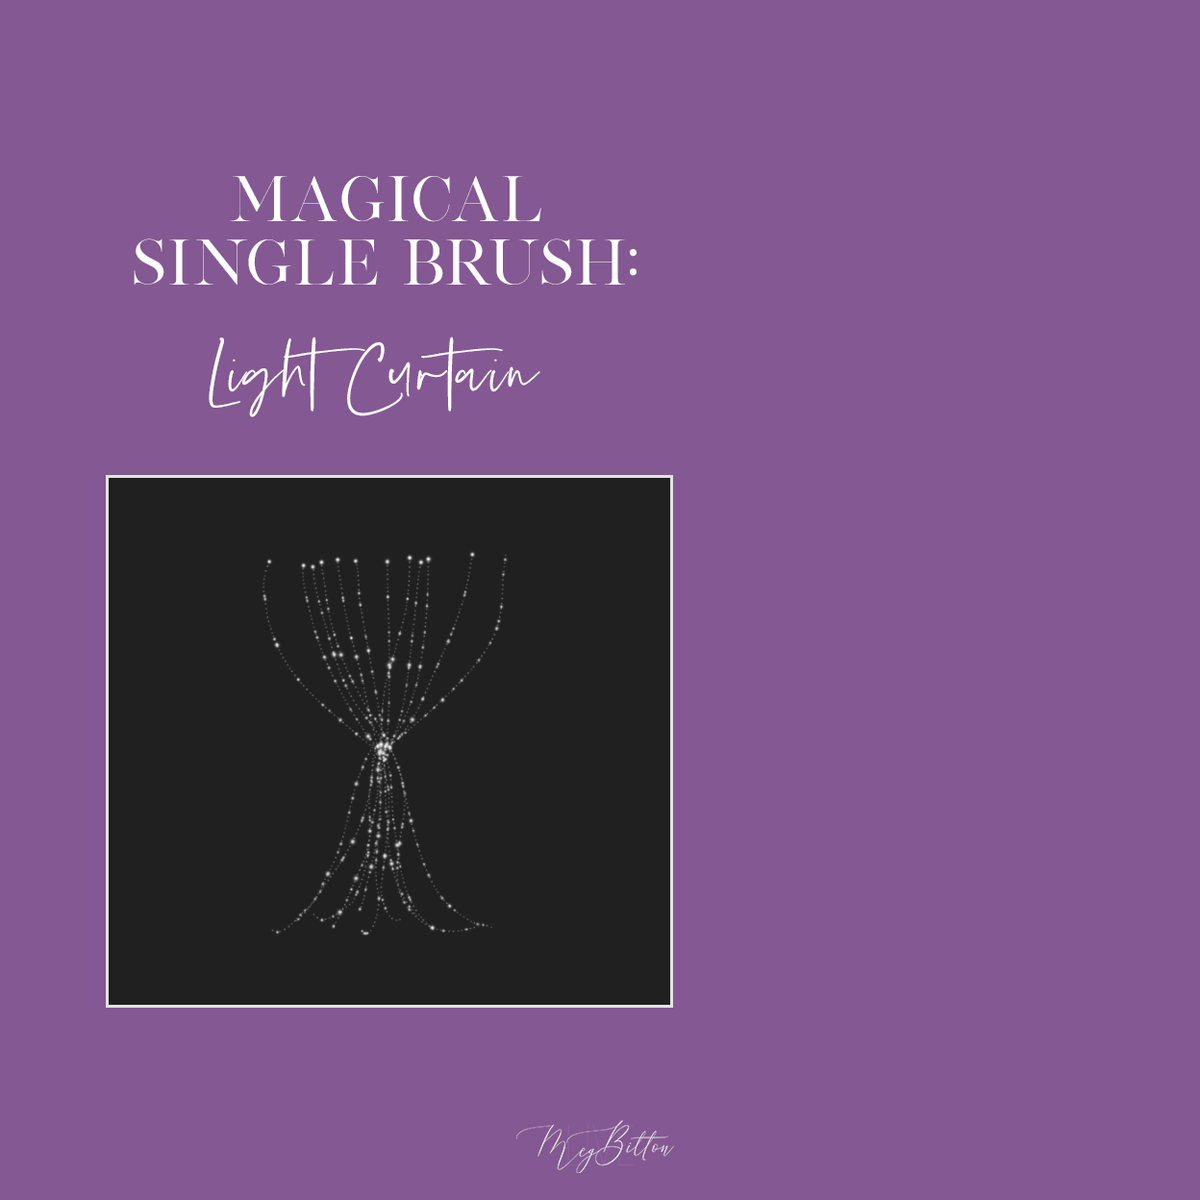 Magical Single Brush - Light Curtain - Meg Bitton Productions